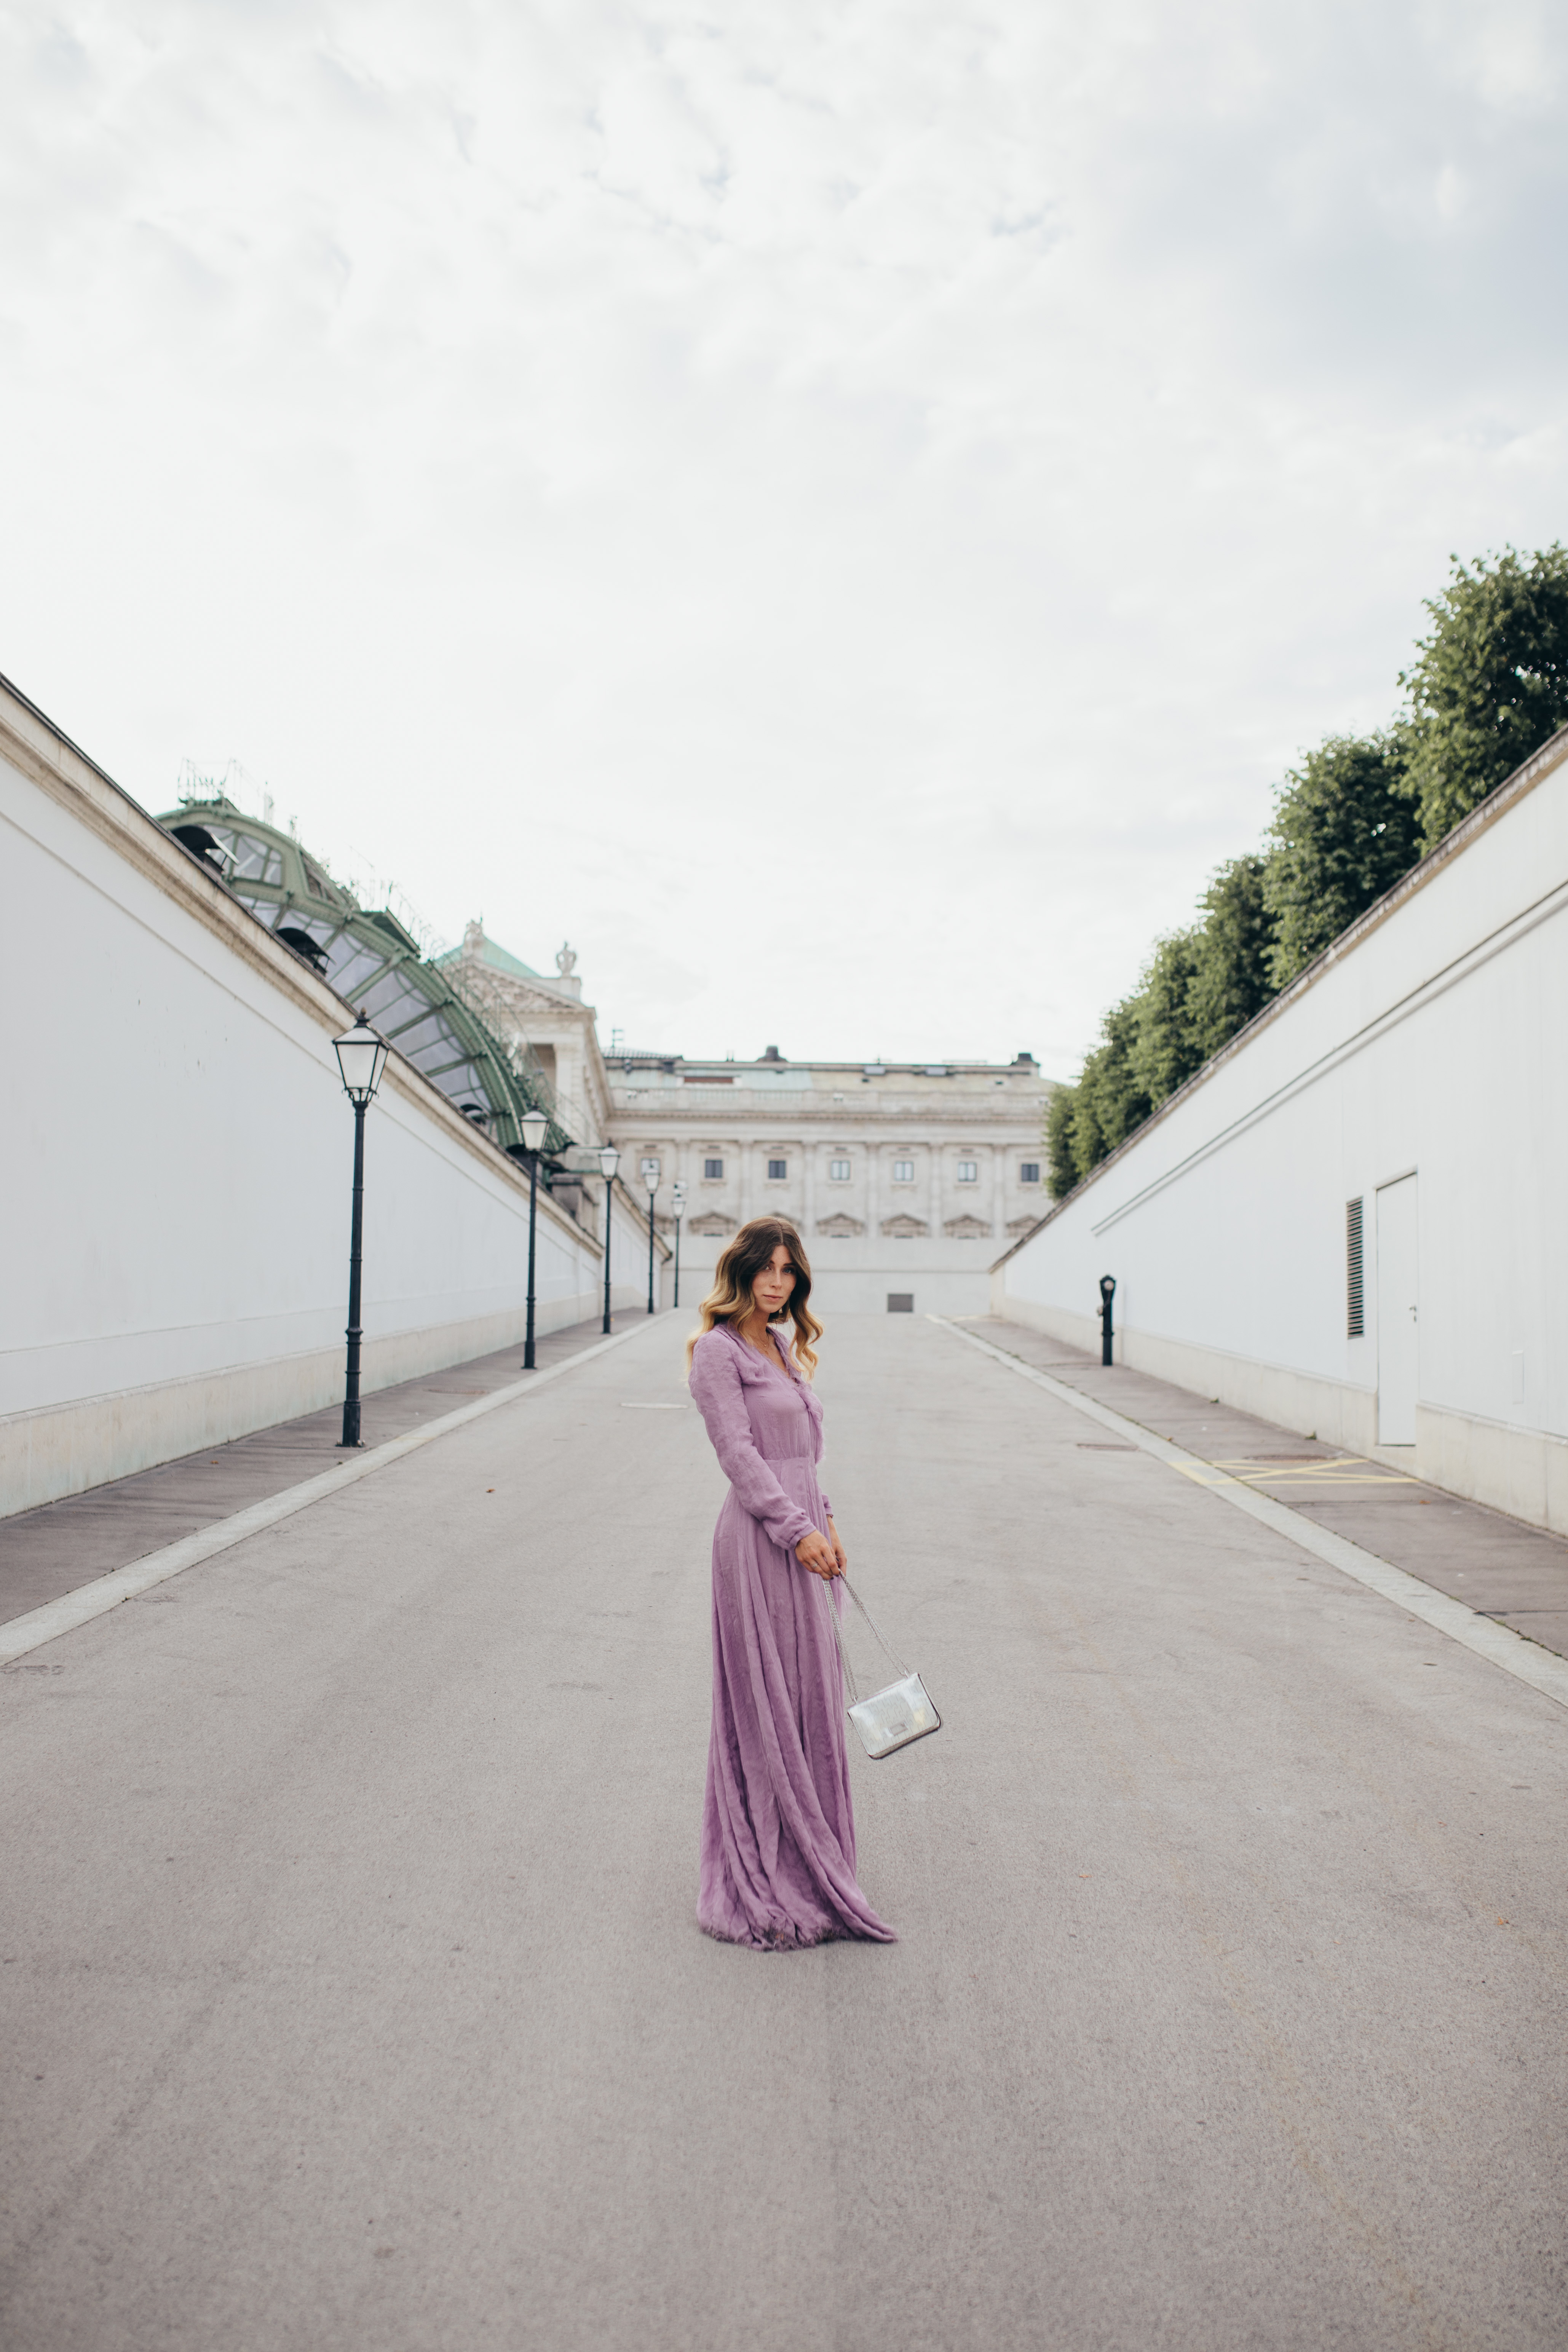 Fête Imperiale Vienna 2017: Aigner Lucy Bag | Bikinis & Passports